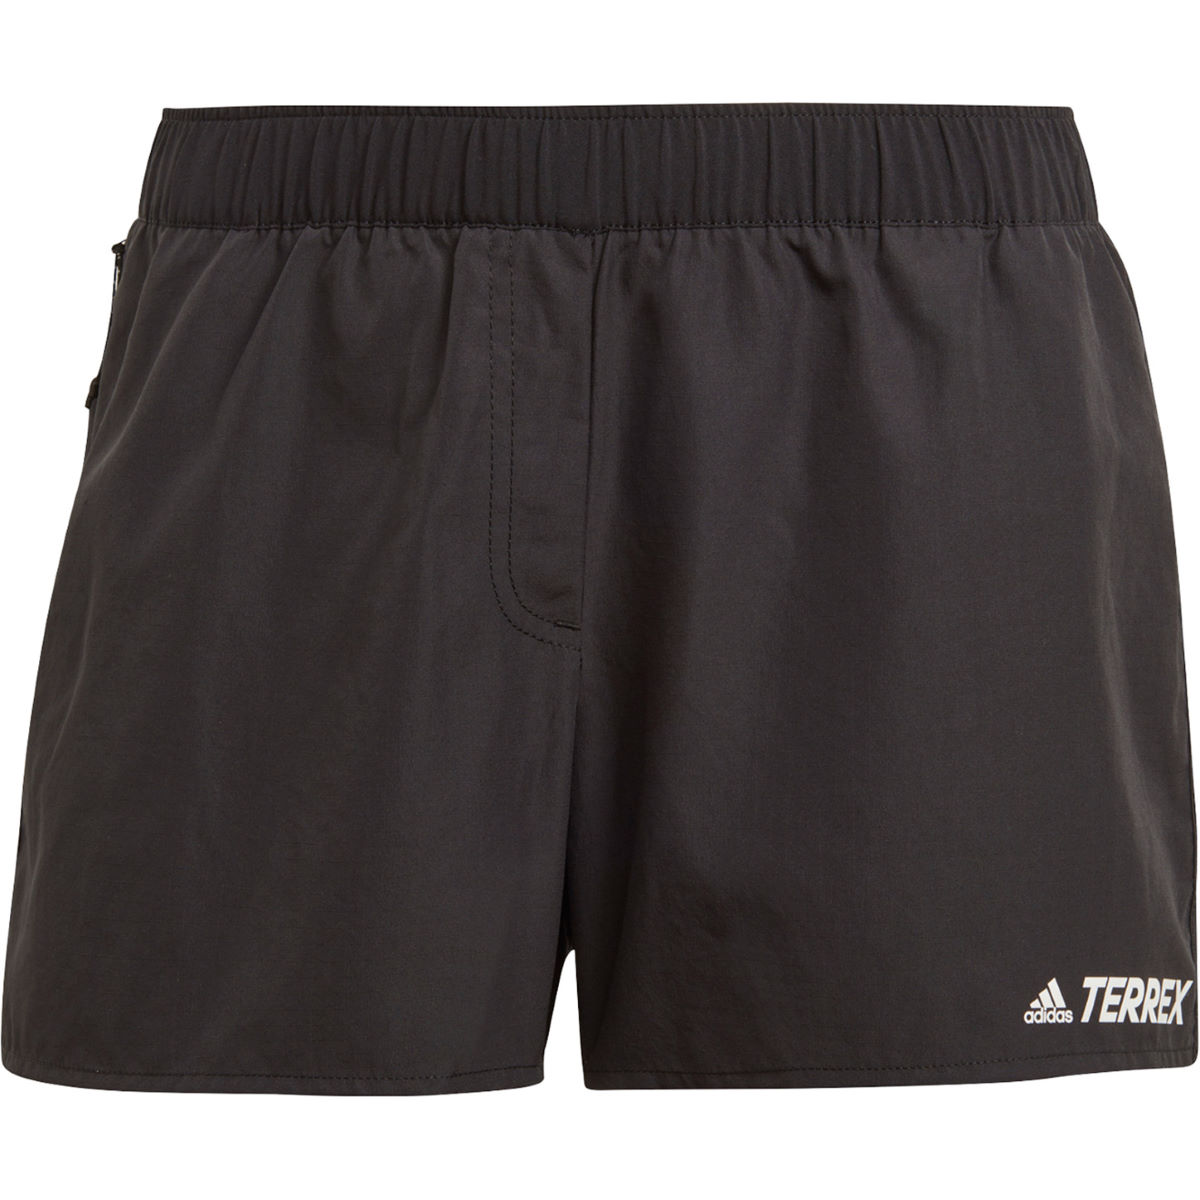 Pantalón corto de running adidas TX TRAIL para mujer - Pantalones cortos